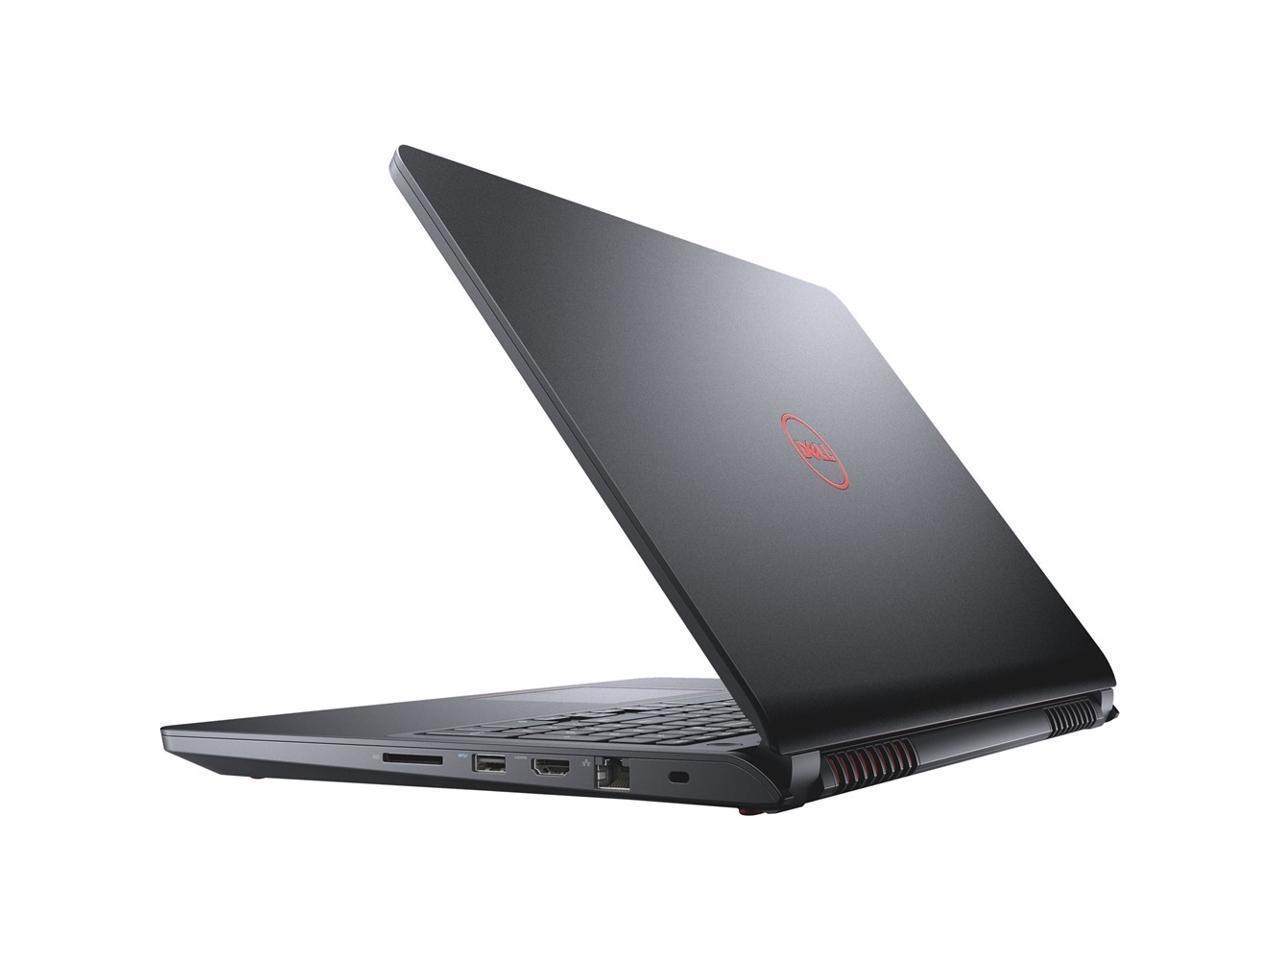 Dell Inspiron 5000 15.6" Full HD Flagship Premium Gaming Laptop | Intel Core i5-7300HQ Quad-Core | NVIDIA GeForce GTX 1050 | 16GB RAM | 128G SSD + 1T HDD | Backlit Keyboard | Windows 10 Home